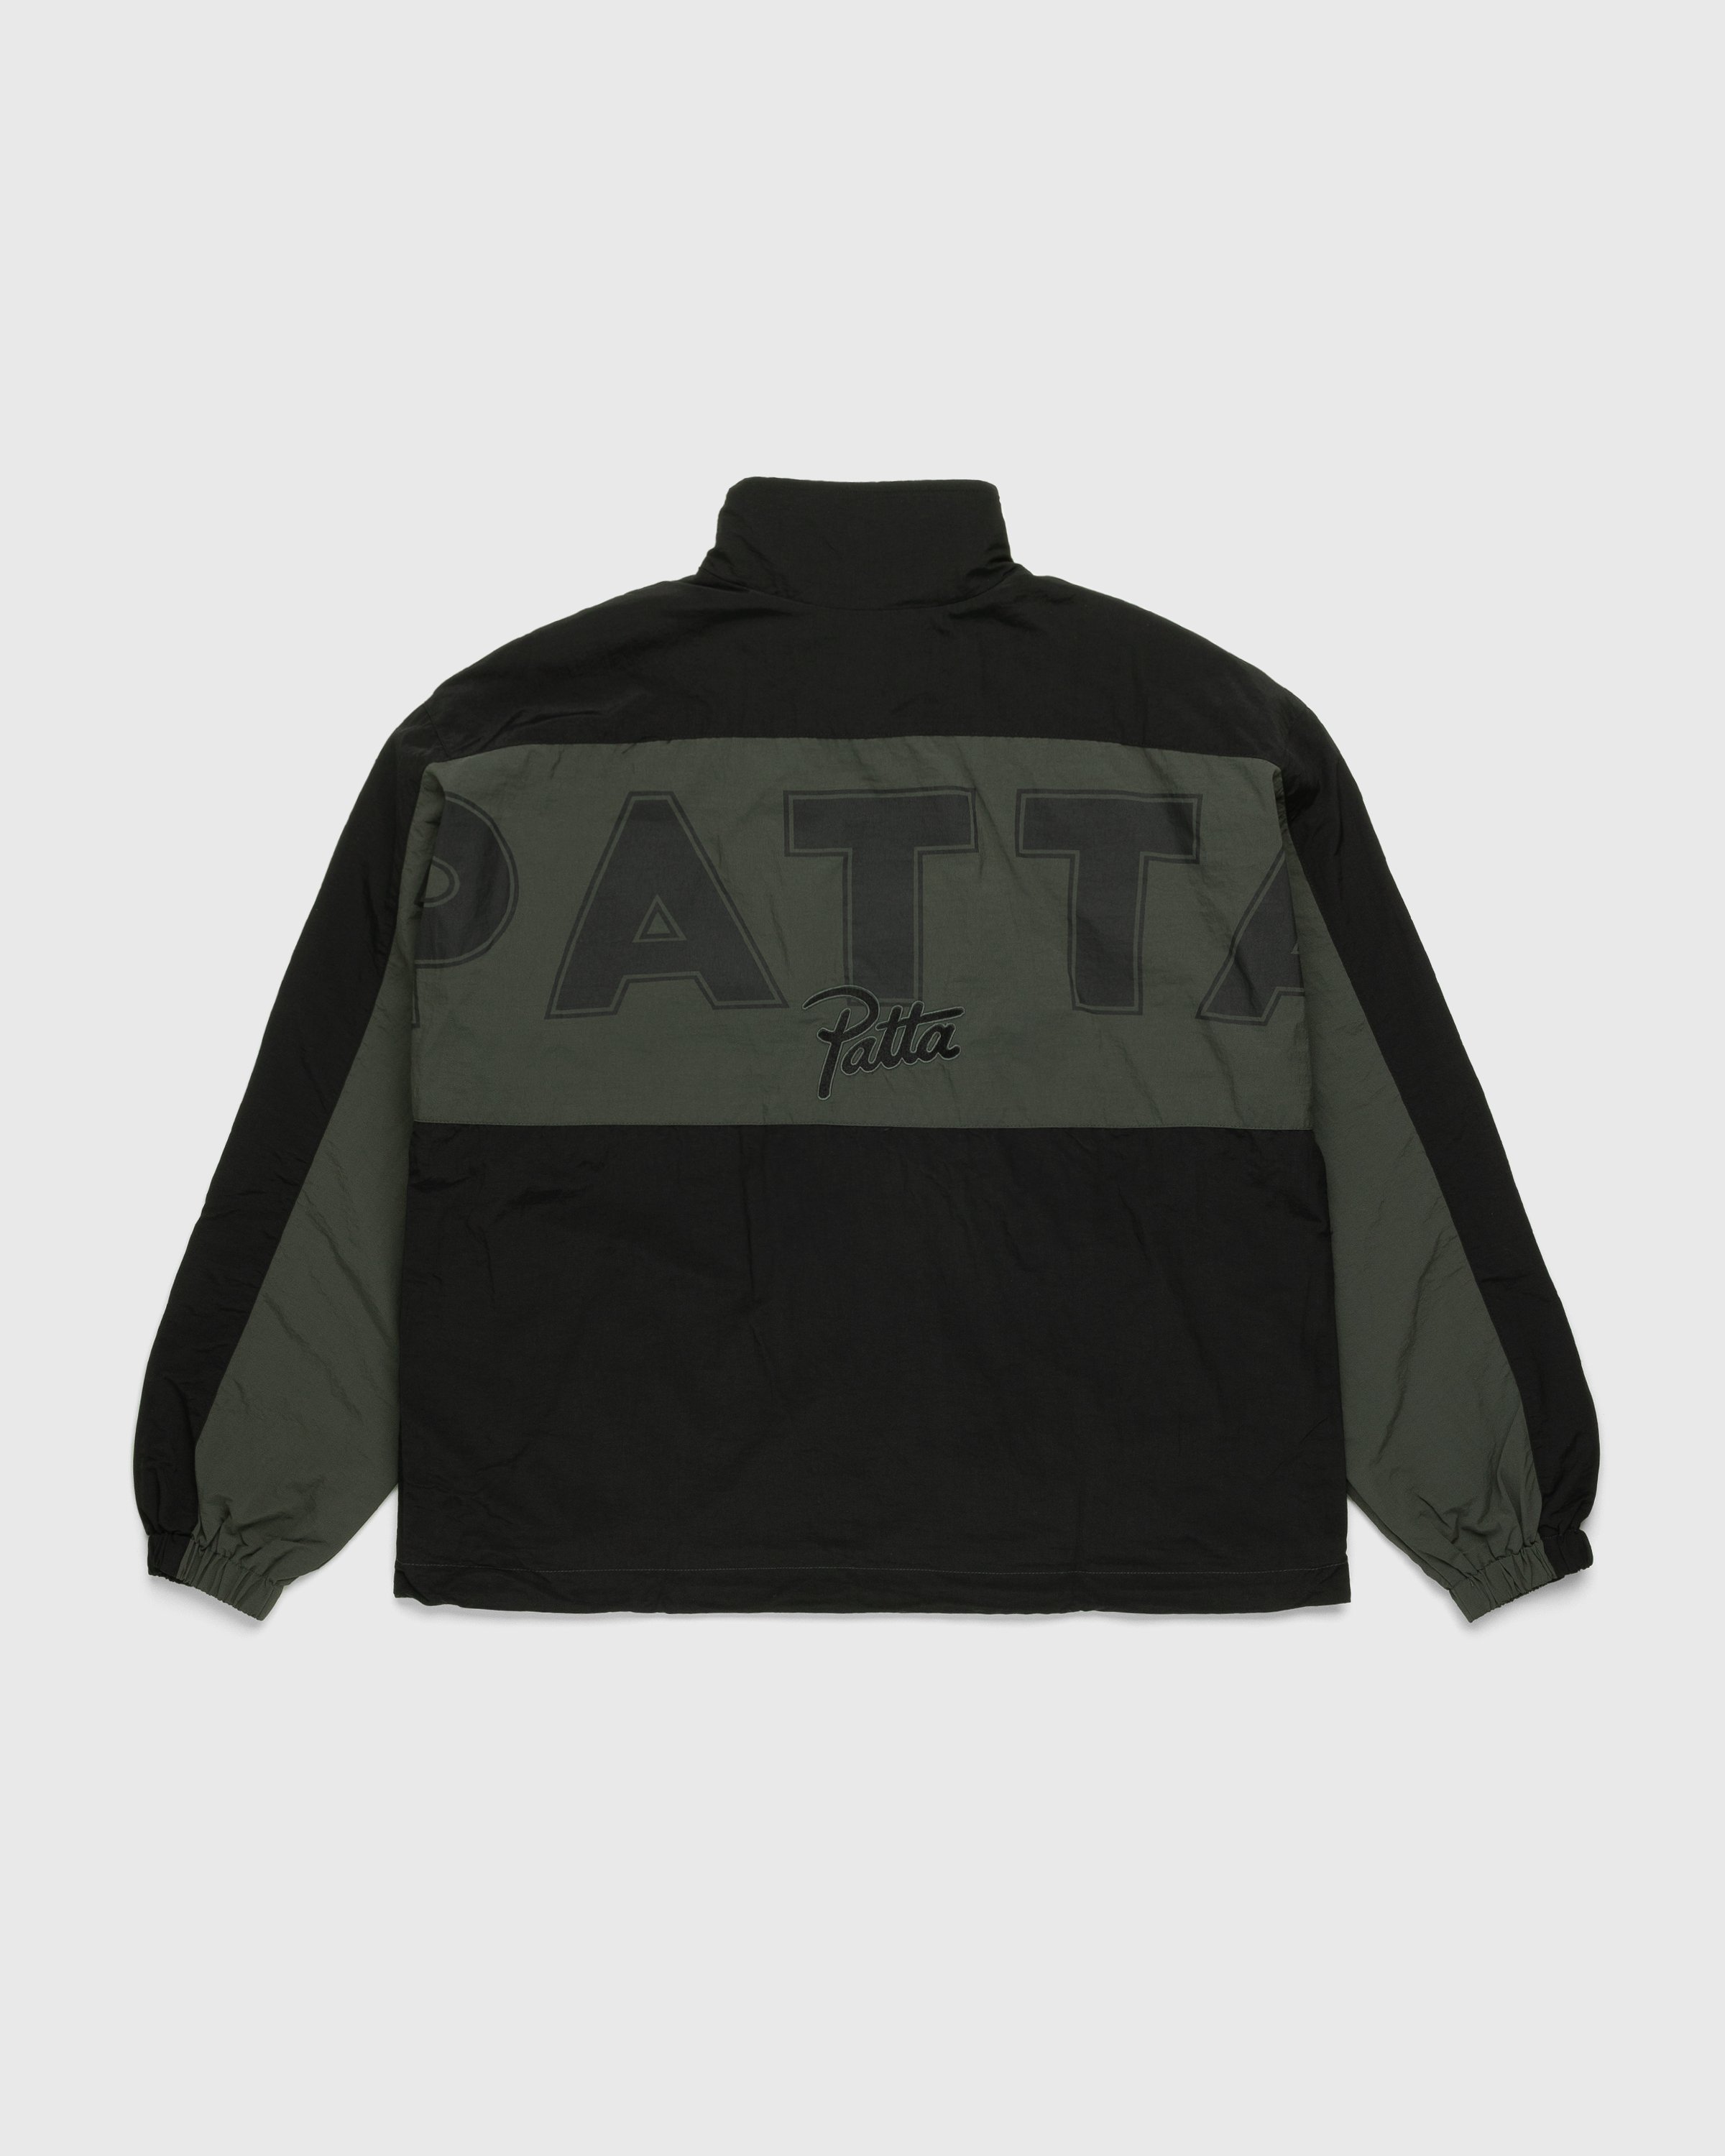 Patta - Athletic Track Jacket Black/Charcoal Grey - Clothing - Black - Image 2